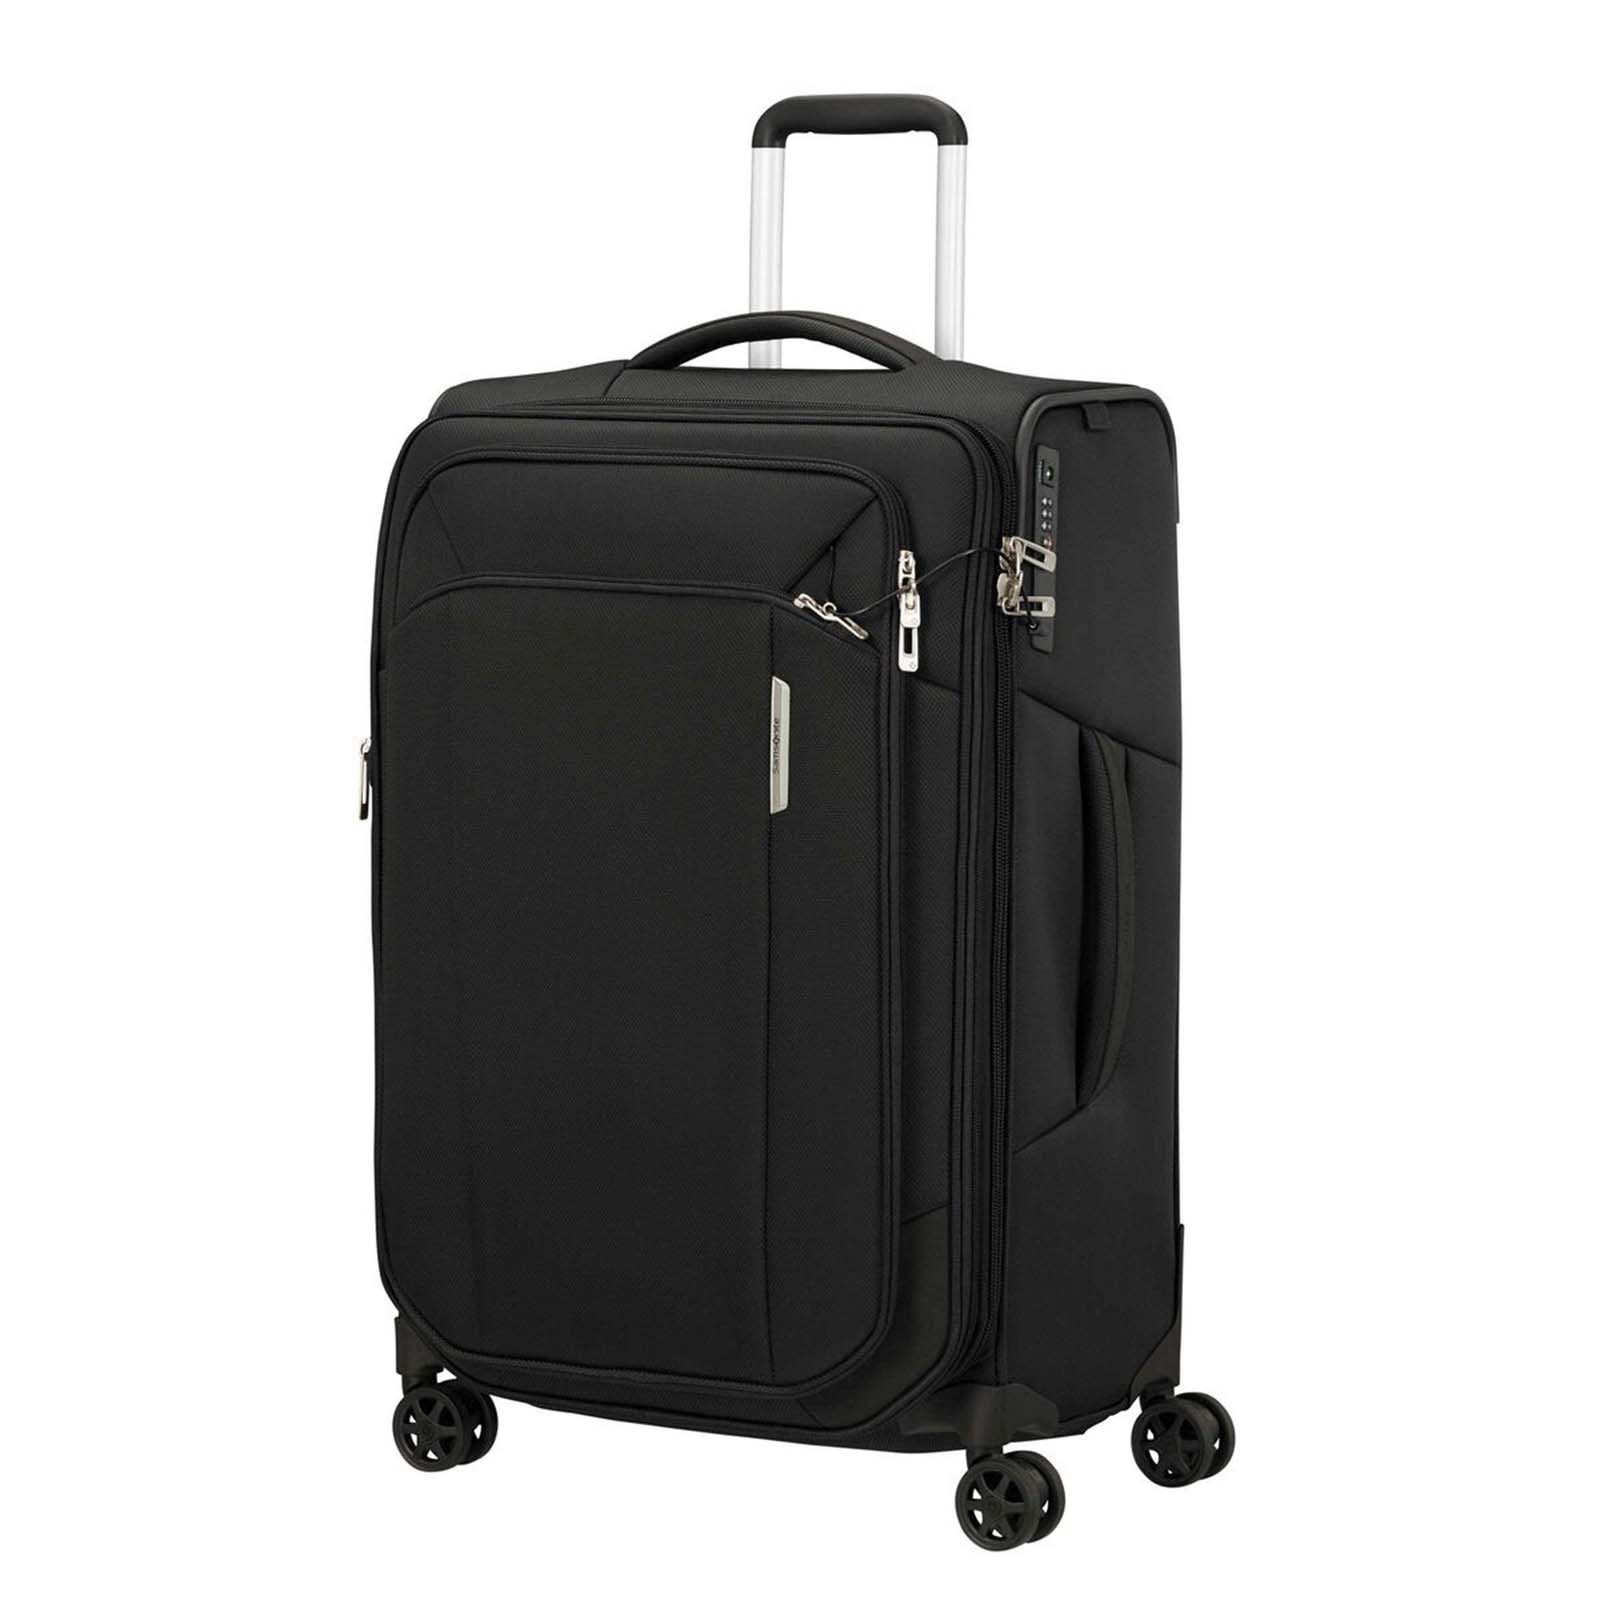 Samsonite-Respark-67cm-Suitcase-Ozone-Black-Front-Angle